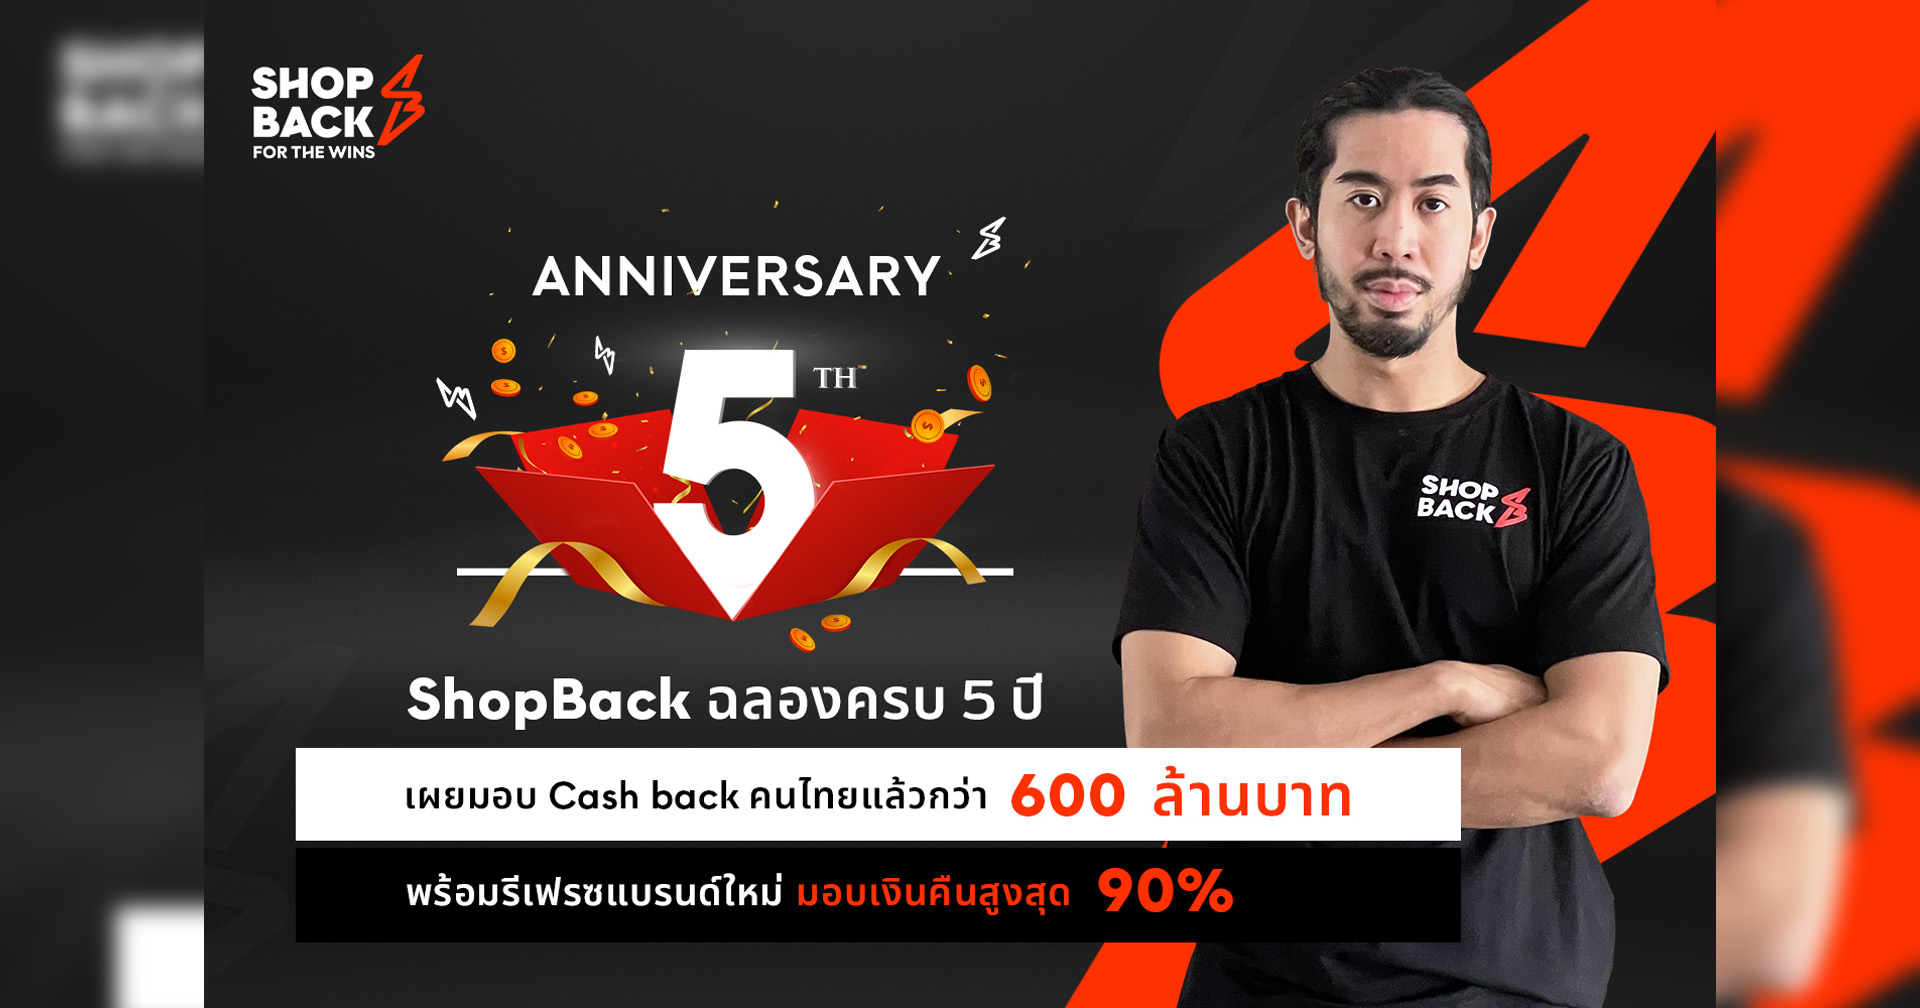 ShopBack ฉลองครบรอบ 5 ปี เผยส่งมอบ Cash back คนไทยไปแล้วกว่า 600 ล้านบาท